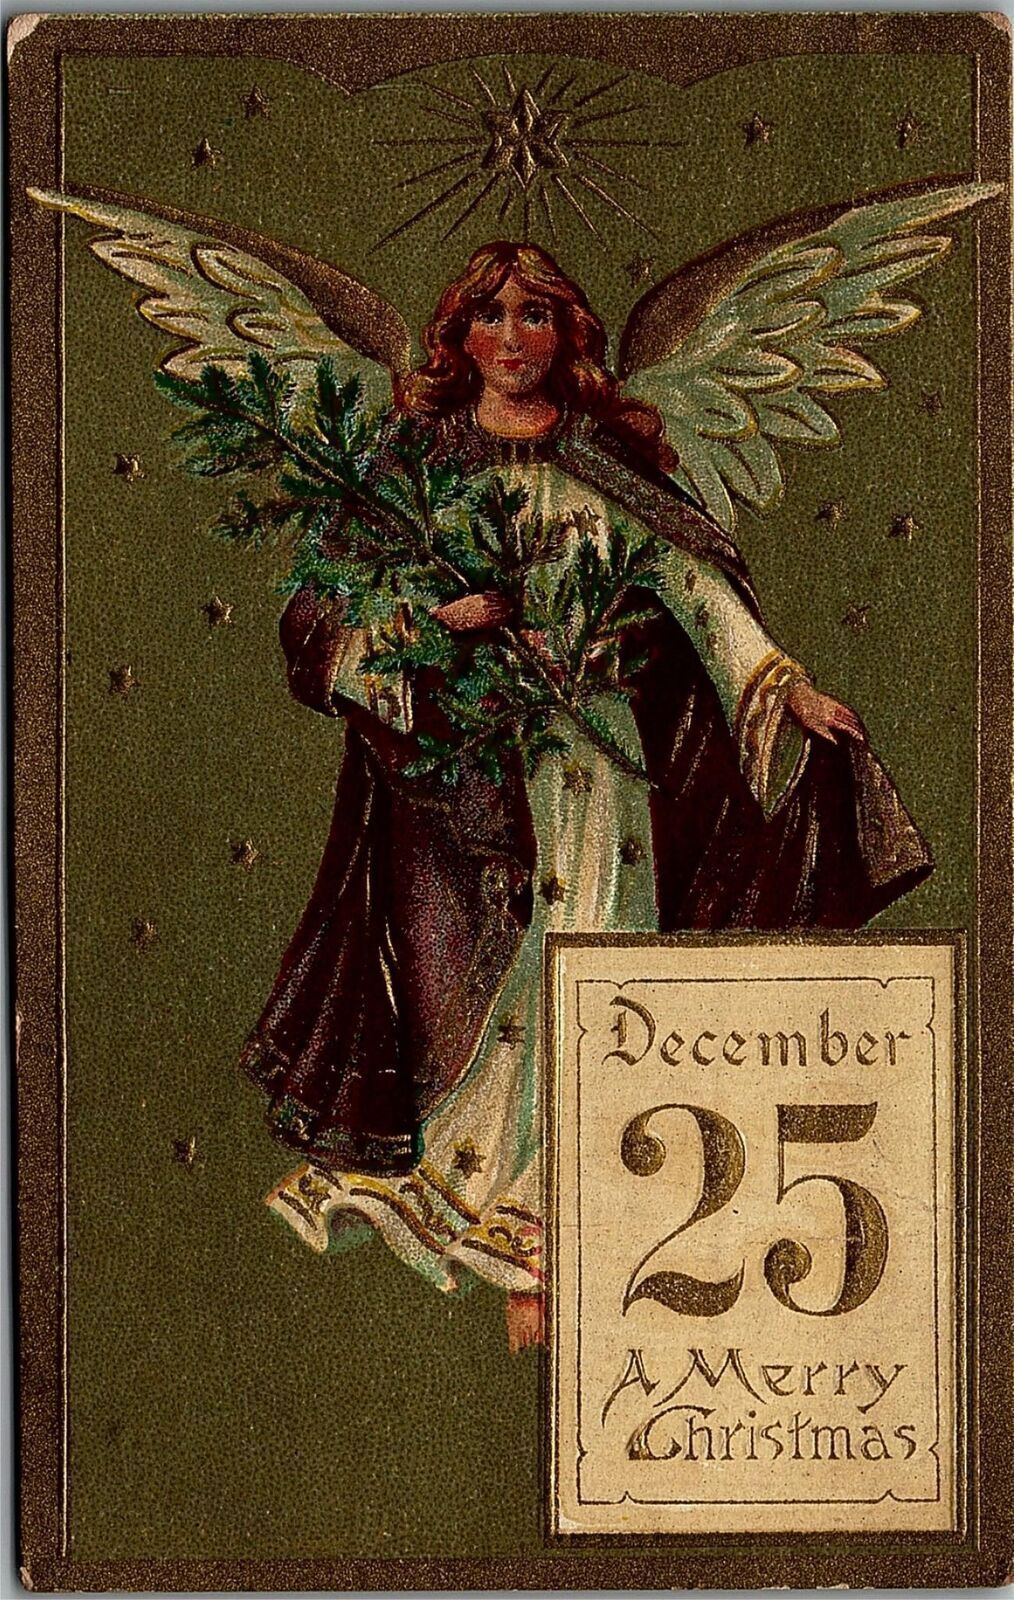 c1910 MERRY CHRISTMAS GOLDEN ANGEL DECEMBER 25 EMBOSSED POSTCARD 39-110